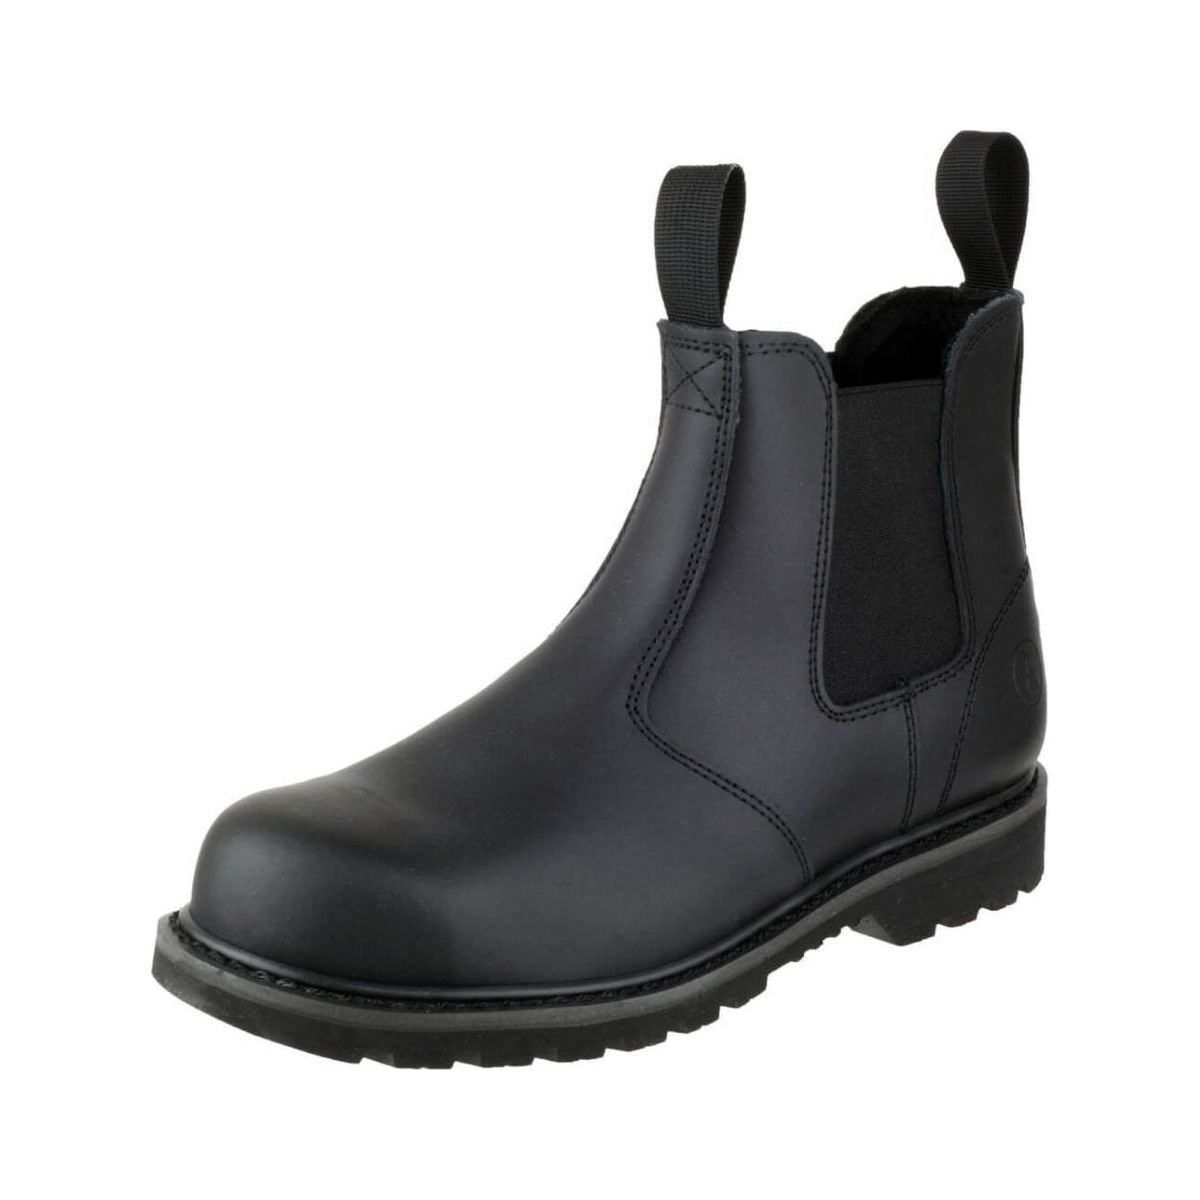 Amblers Fs5 Welted Safety Dealer Boots Mens - workweargurus.com